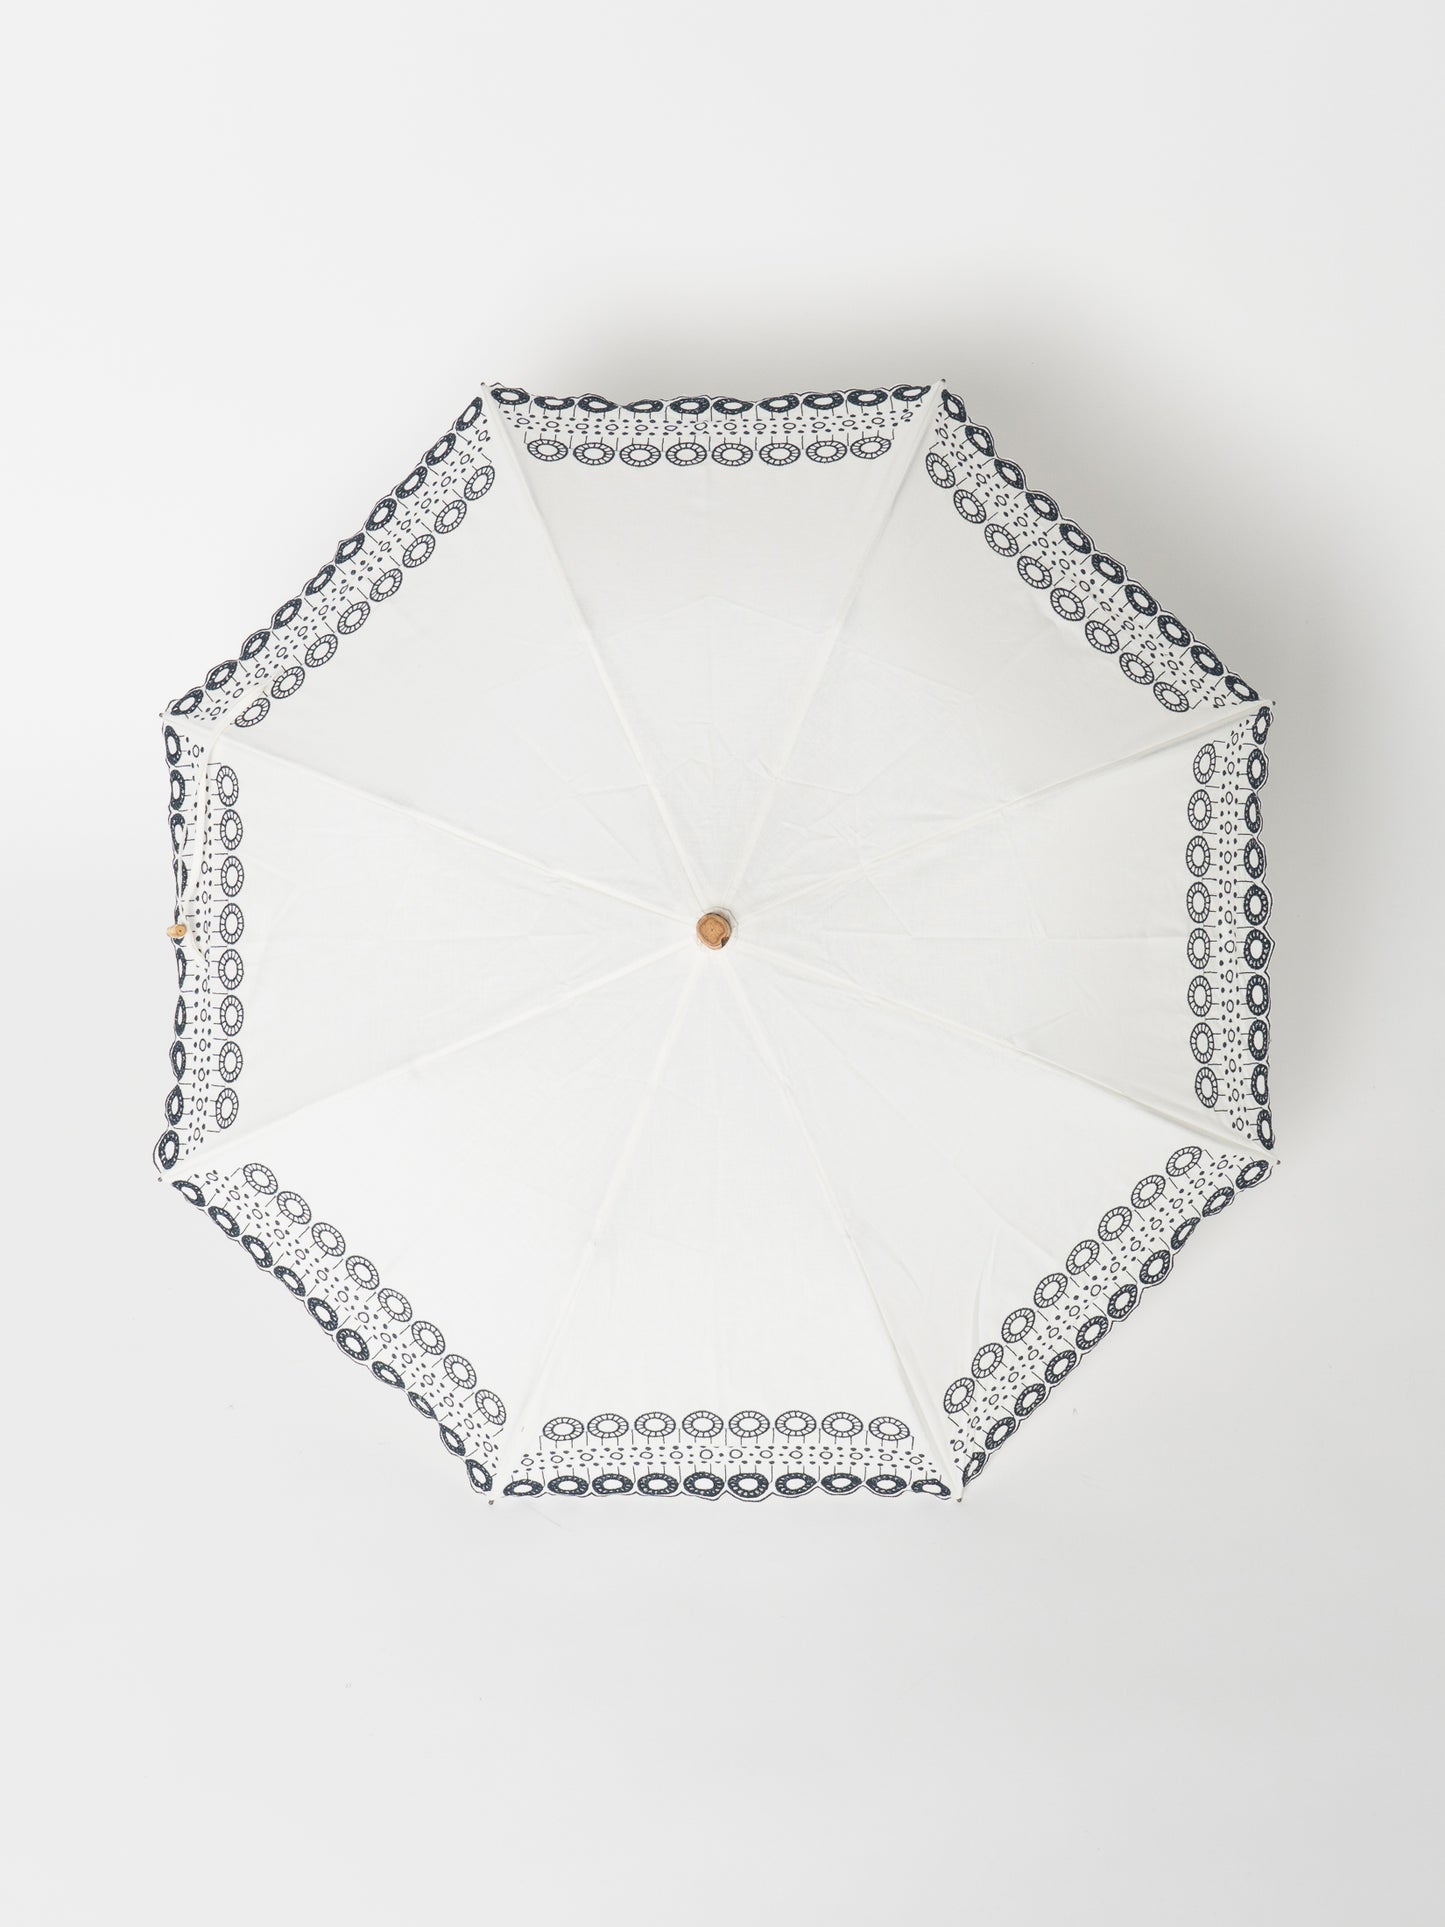 embroidery w bamboo 晴雨兼用折畳傘